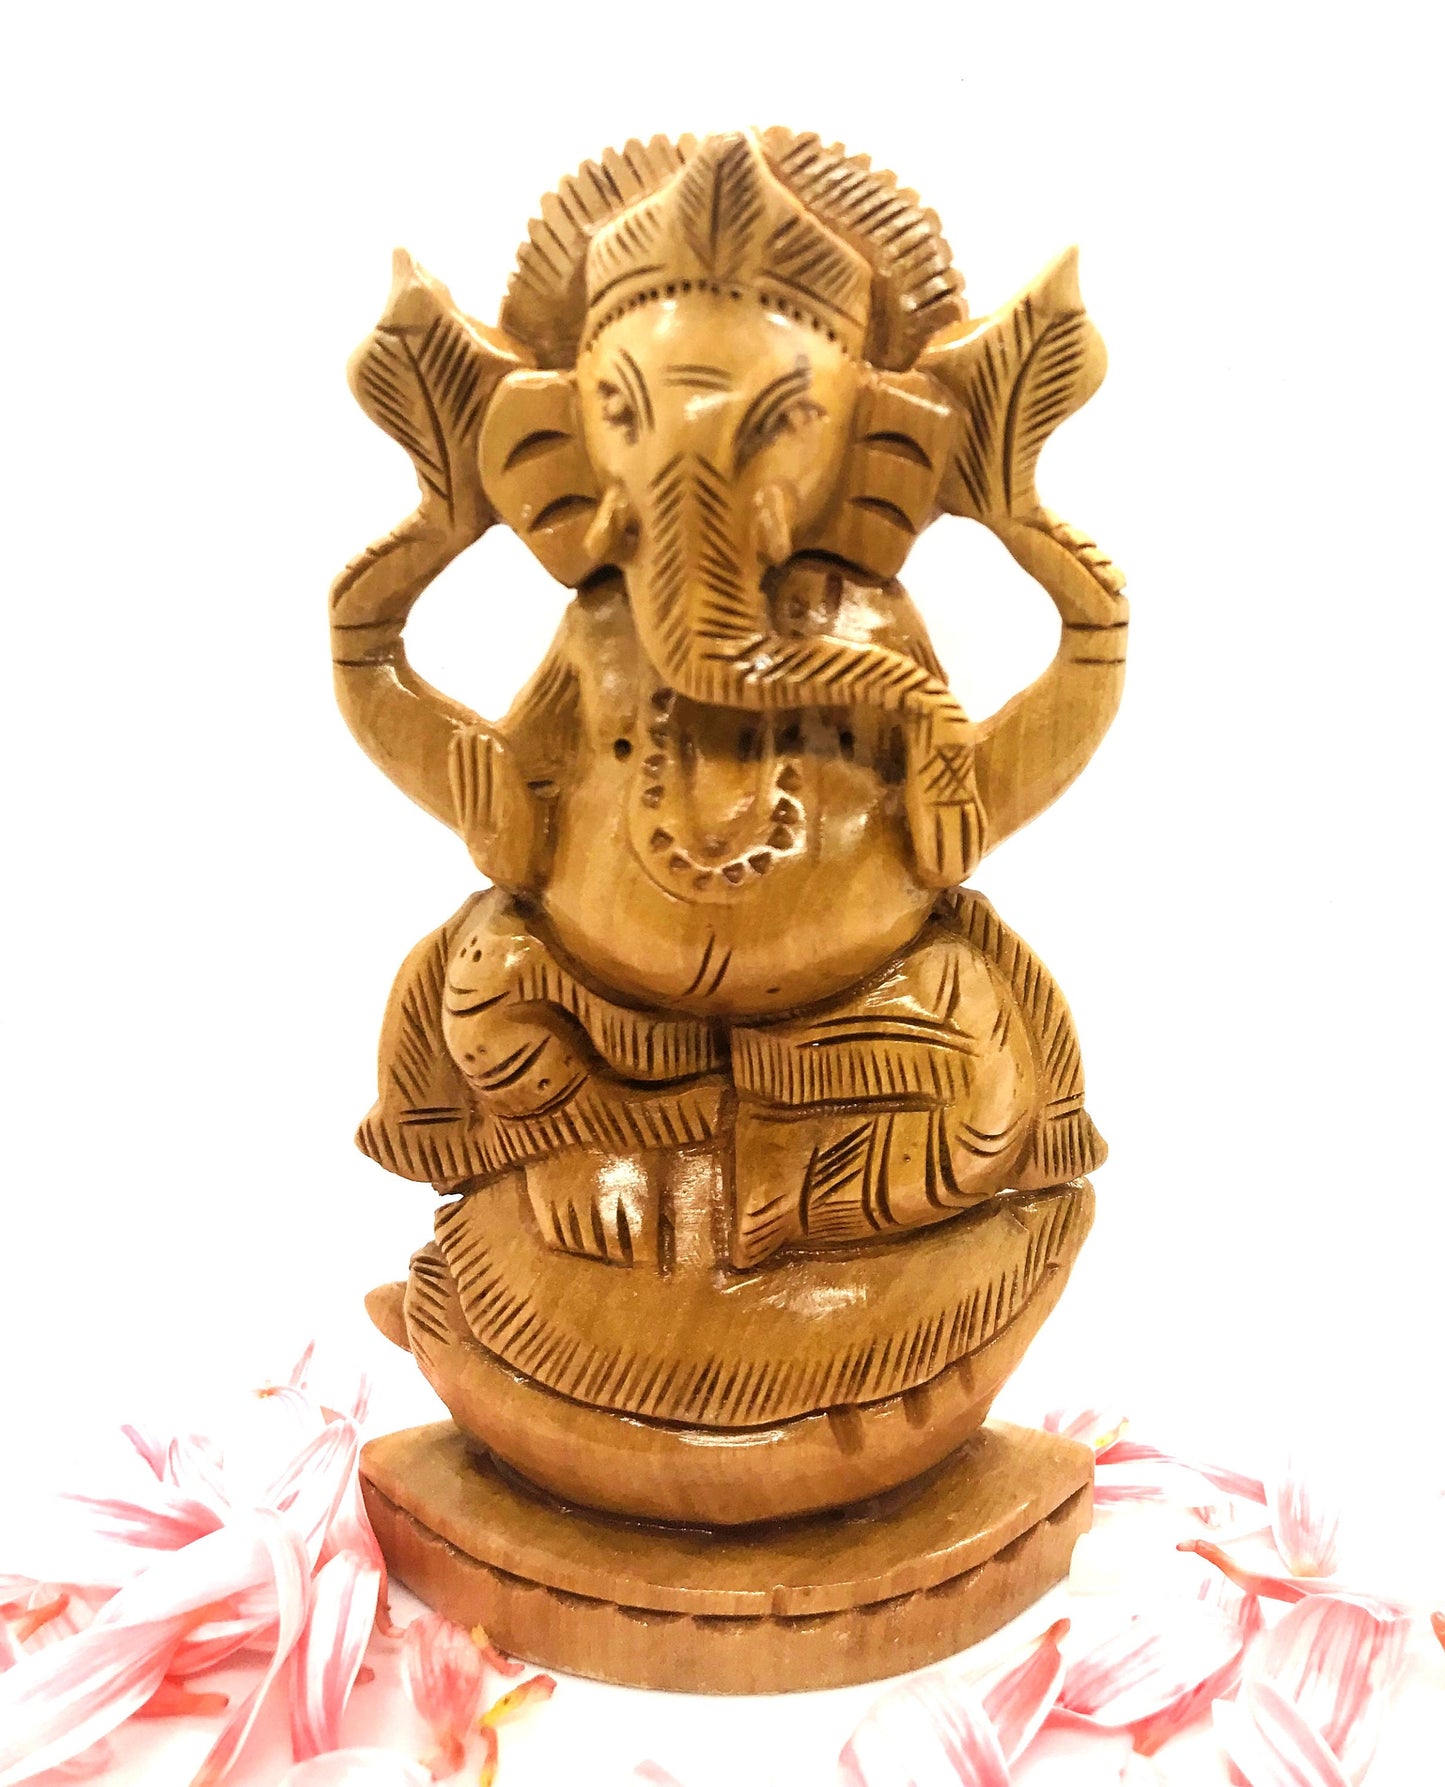 GANESHA Statue - Wooden Ganesh idol - GANPATI wooden hand carved 5 inches statue - Hindu Elephant God GANESH - good luck success prosperity